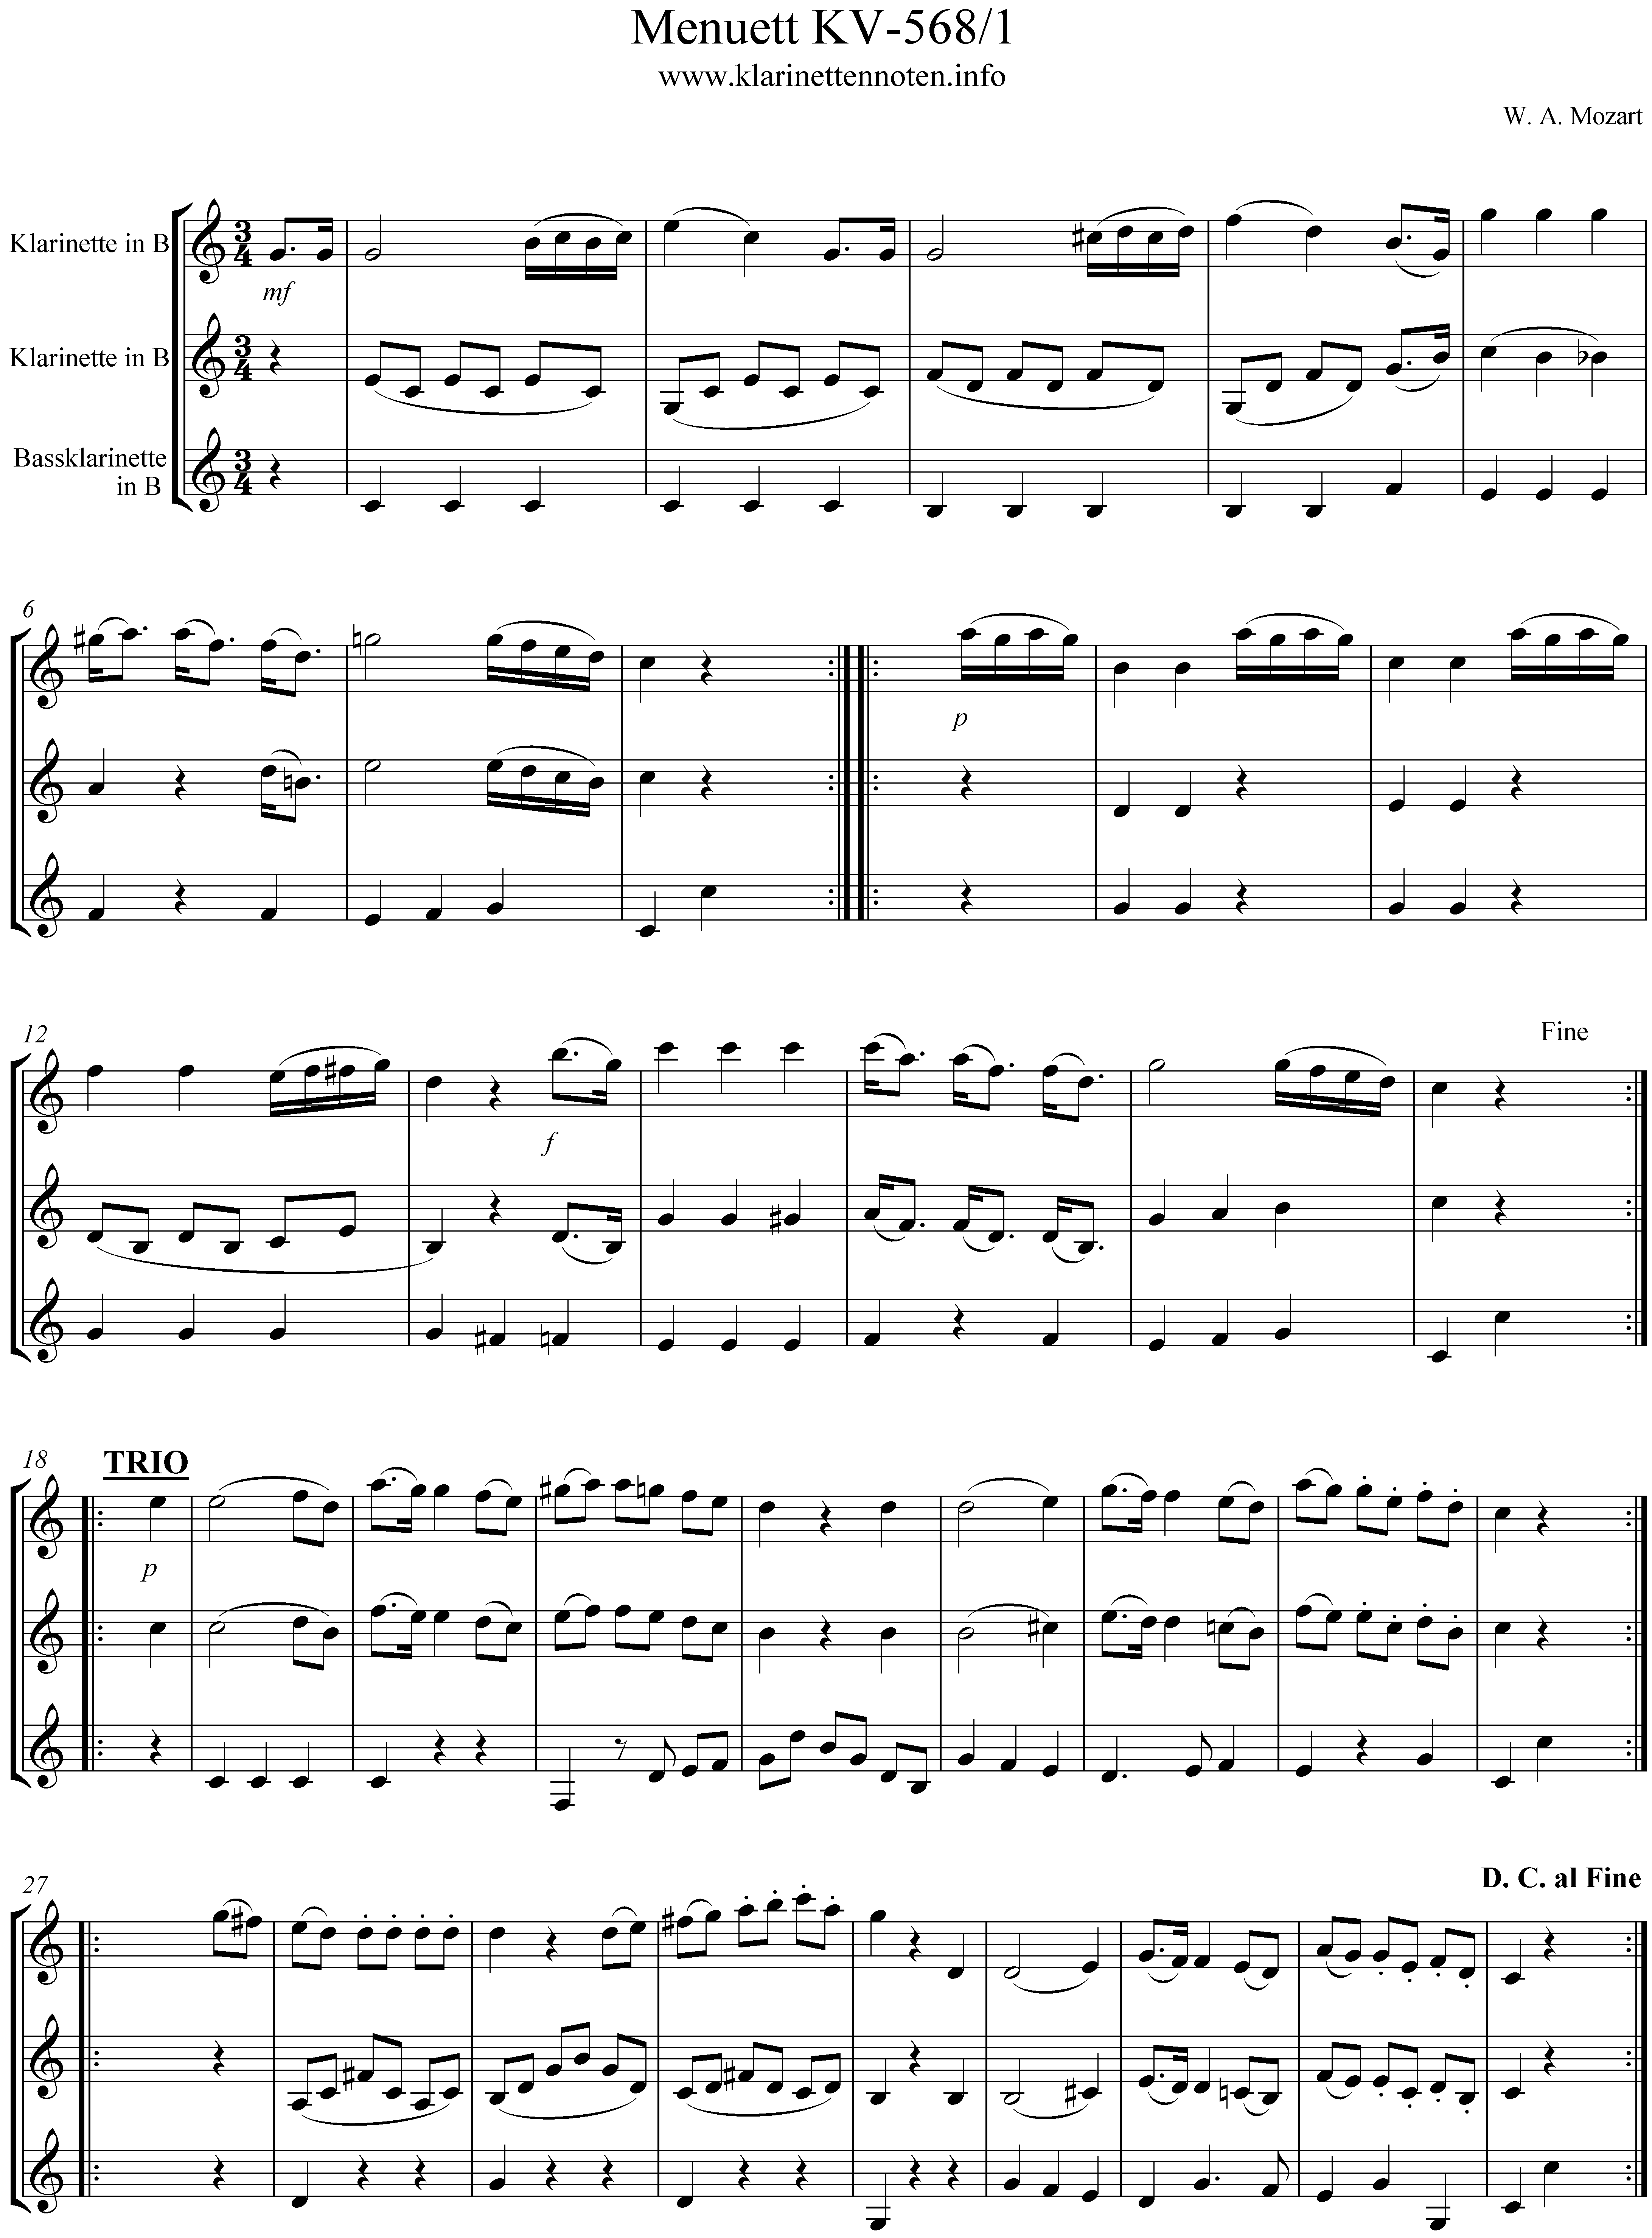 Klarinettentrio - KV568/1, Menuett in C